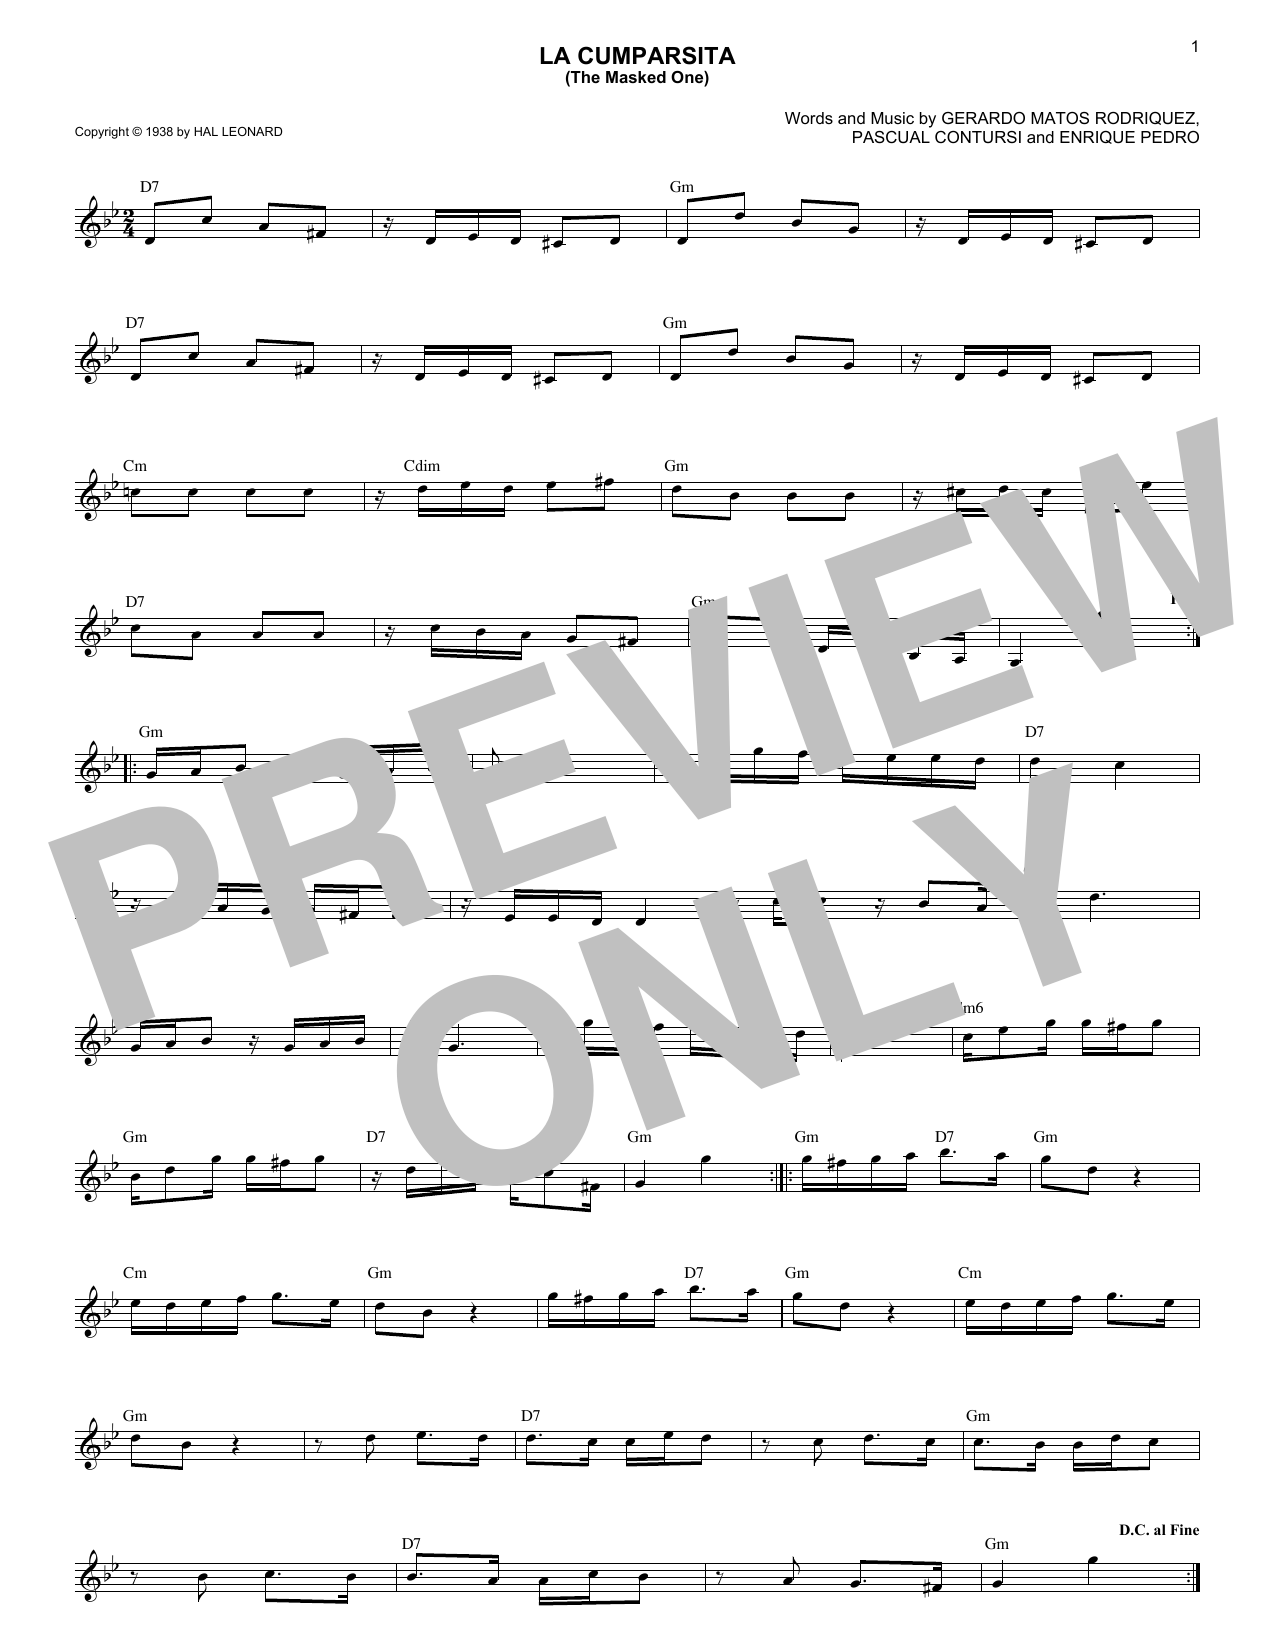 Gerardo Matos Rodriguez La Cumparsita (The Masked One) Sheet Music Notes & Chords for Lead Sheet / Fake Book - Download or Print PDF